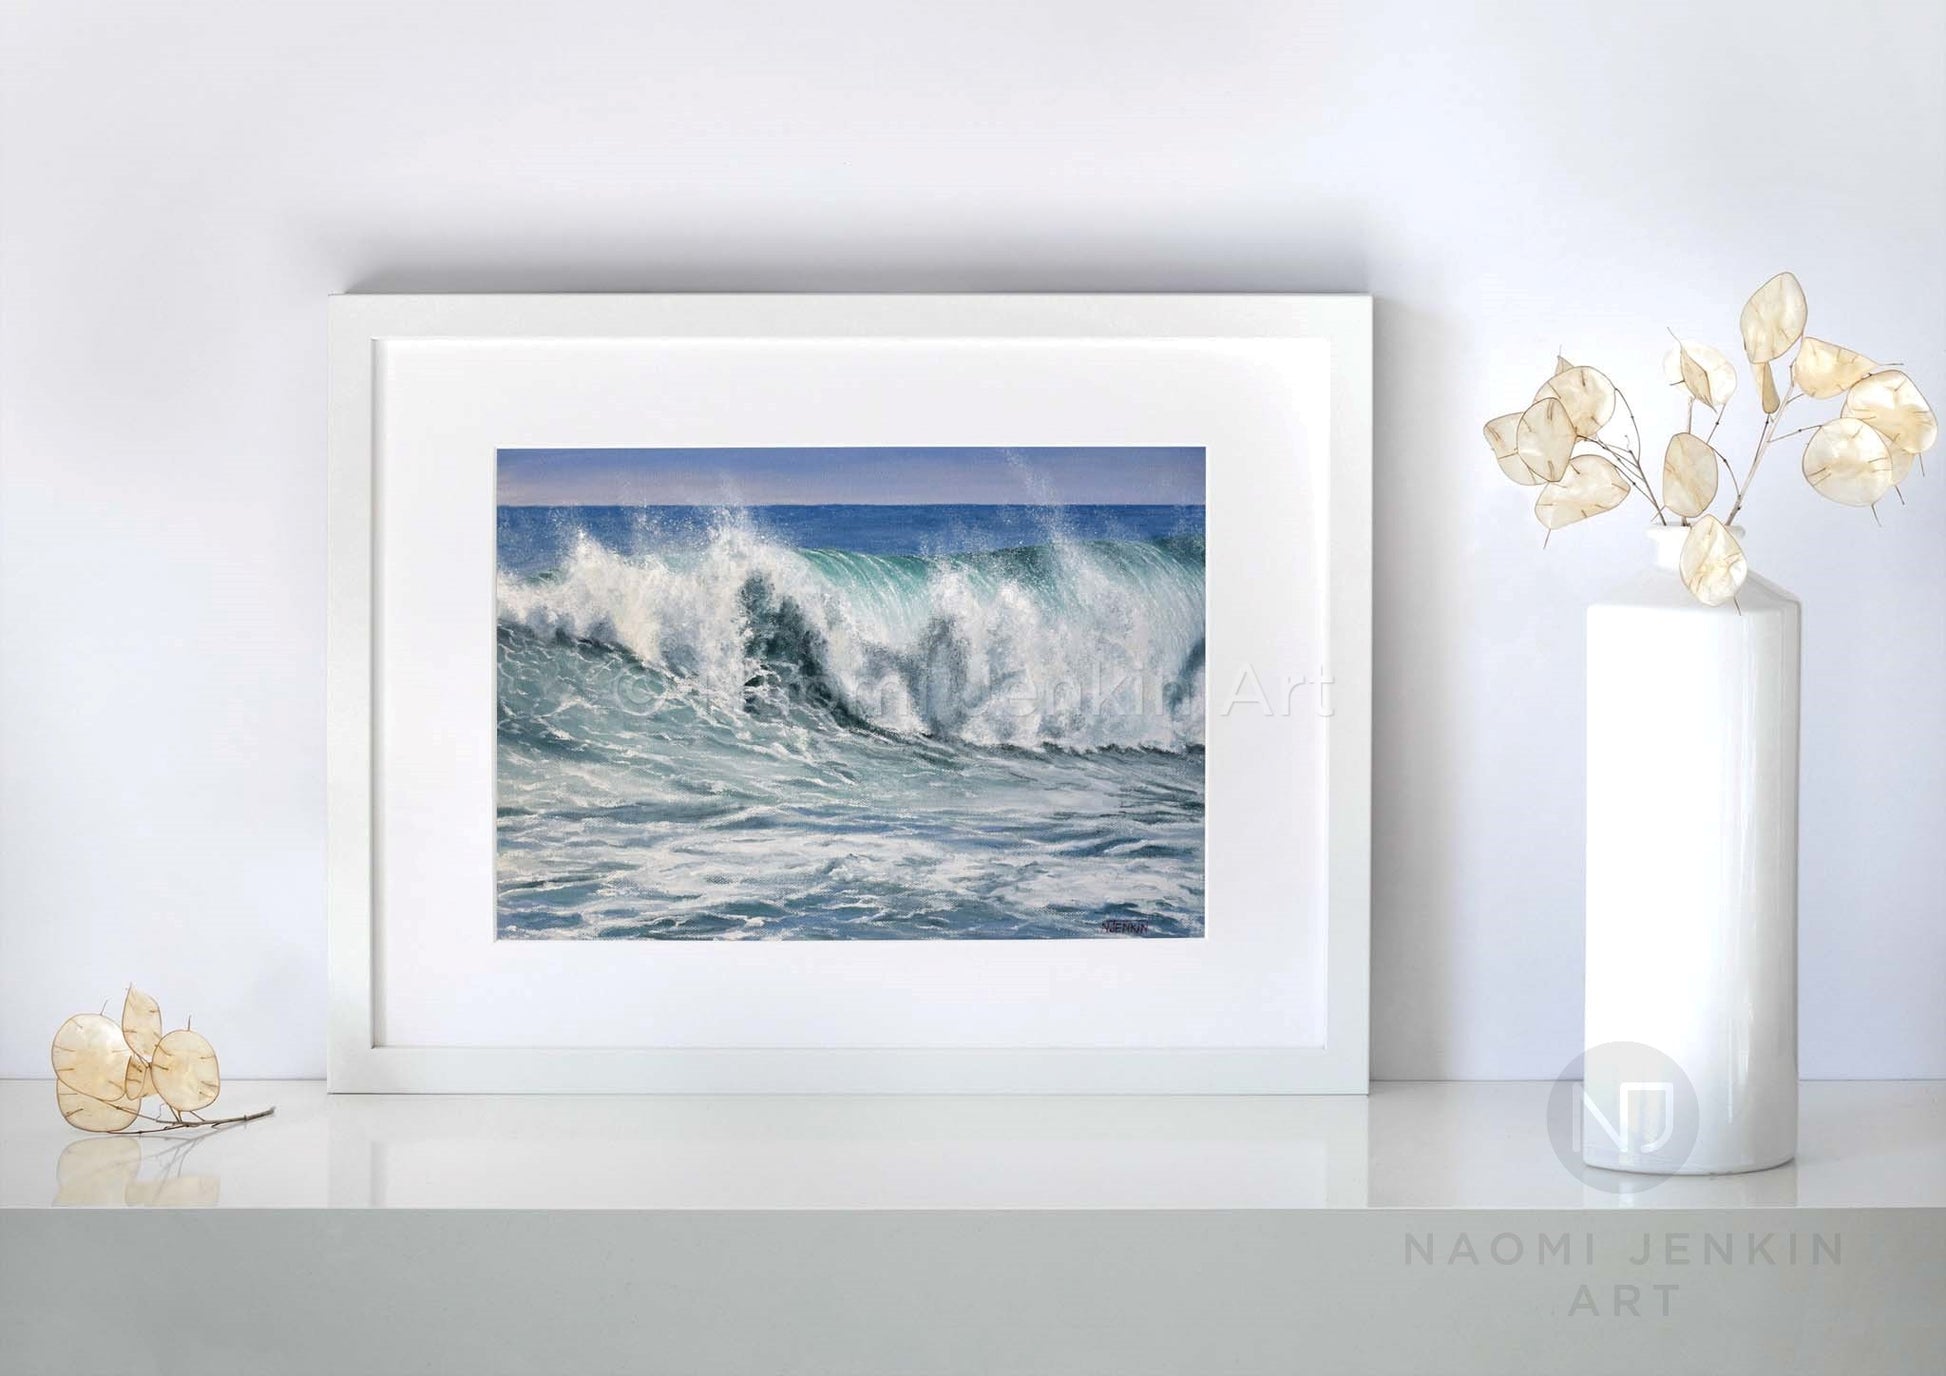 Seascape print 'Offshore Spray' by Naomi Jenkin Art in a white frame